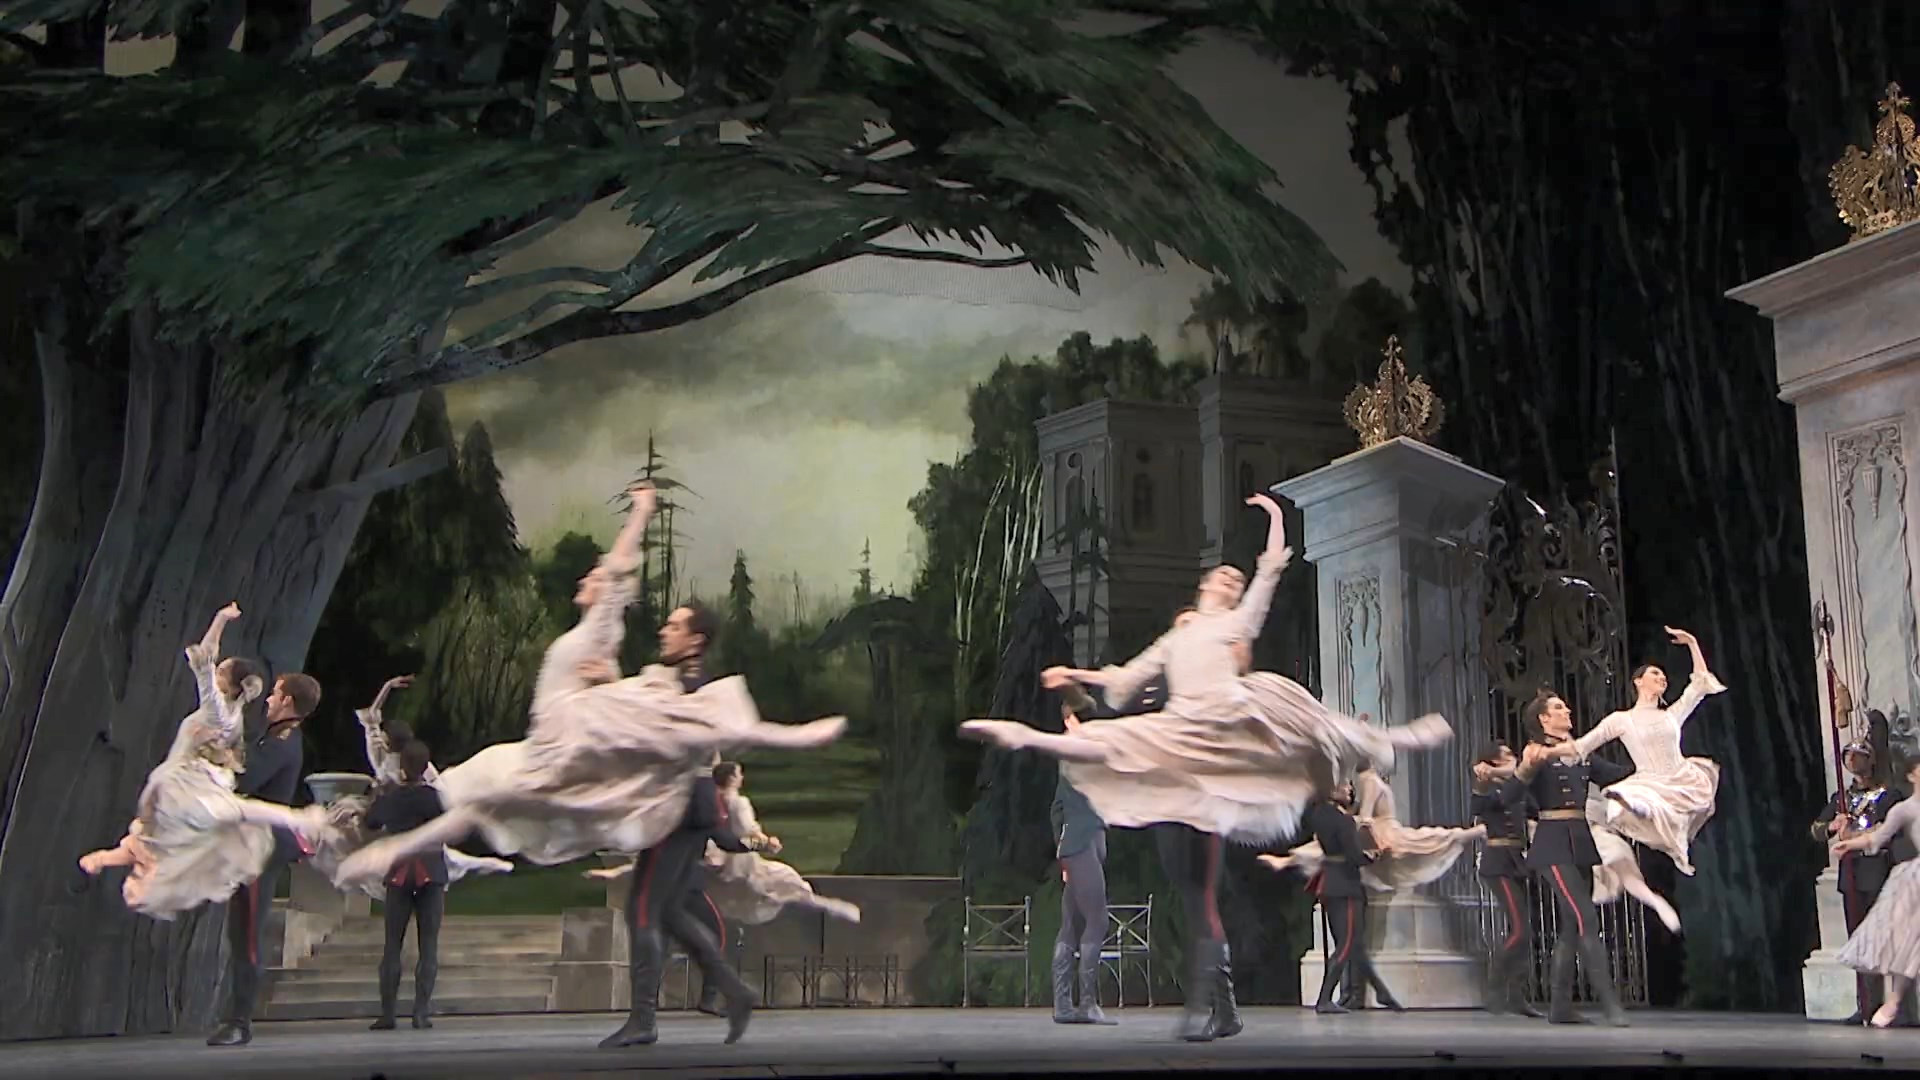 Swan Lake - The Royal Ballet